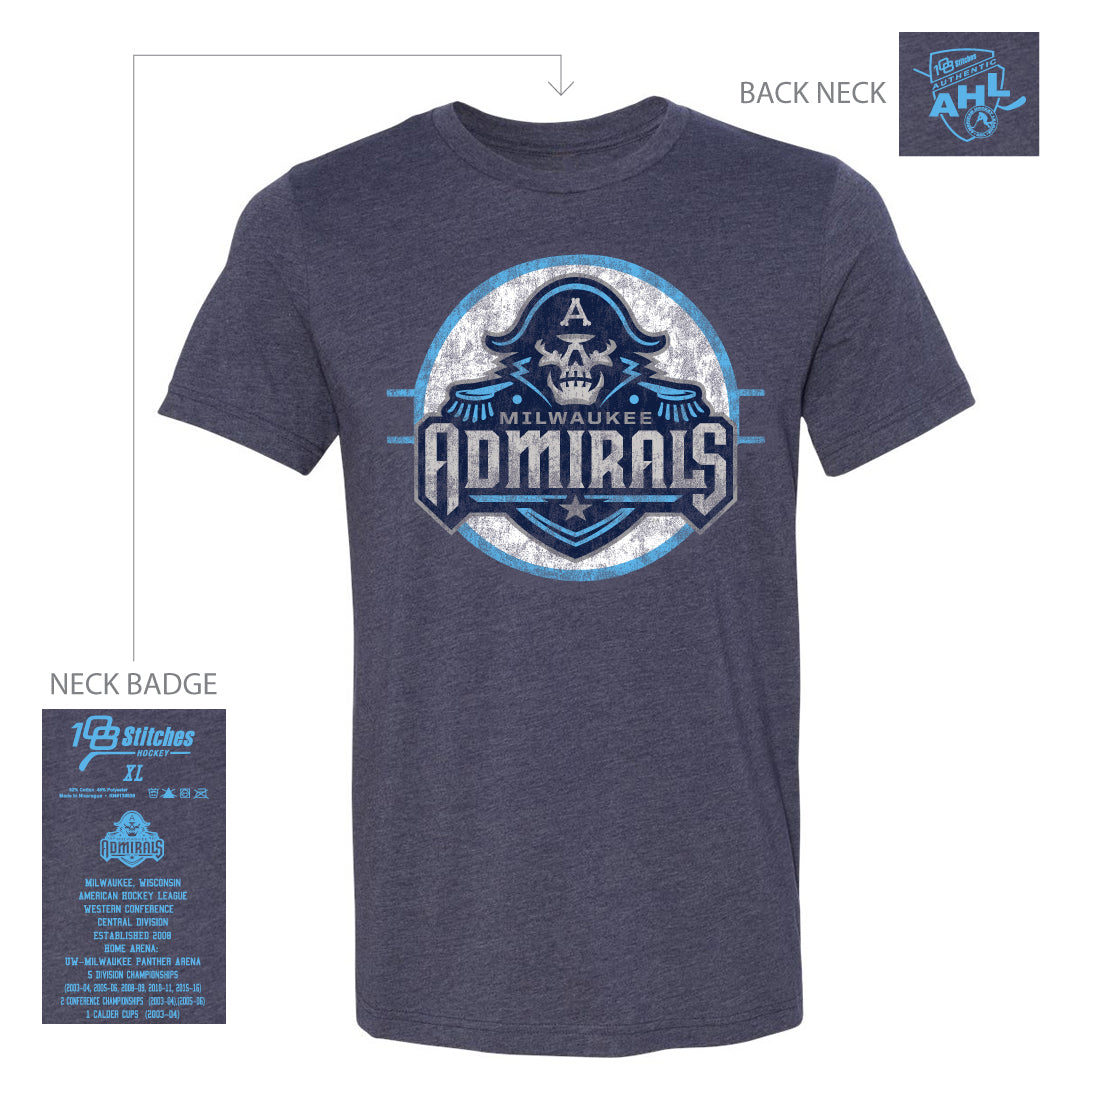 108 Stitches Milwaukee Admirals Adult Circle T-Shirt (Sidewalk Sale, Large)